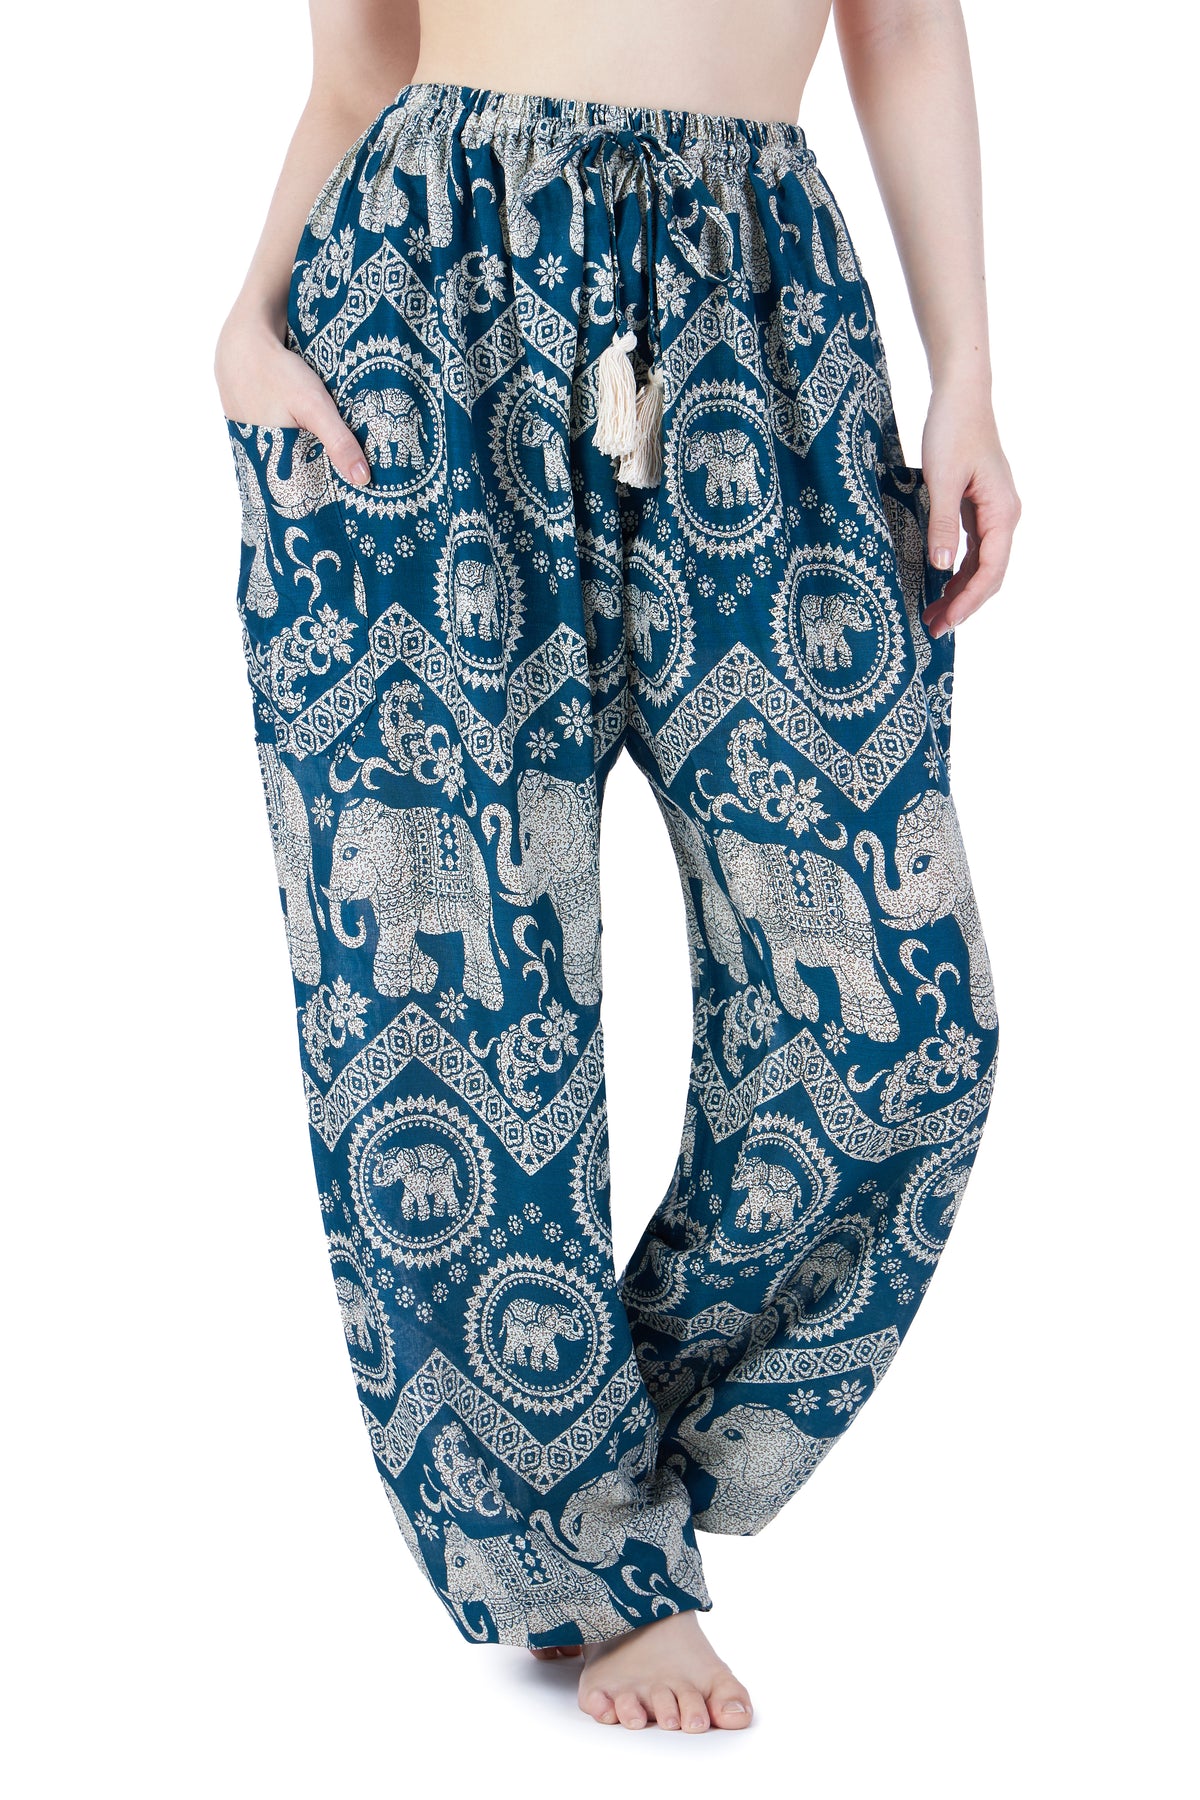 Drawstring Boho Harem Pants: Daily Yoga Hippie Trousers ...